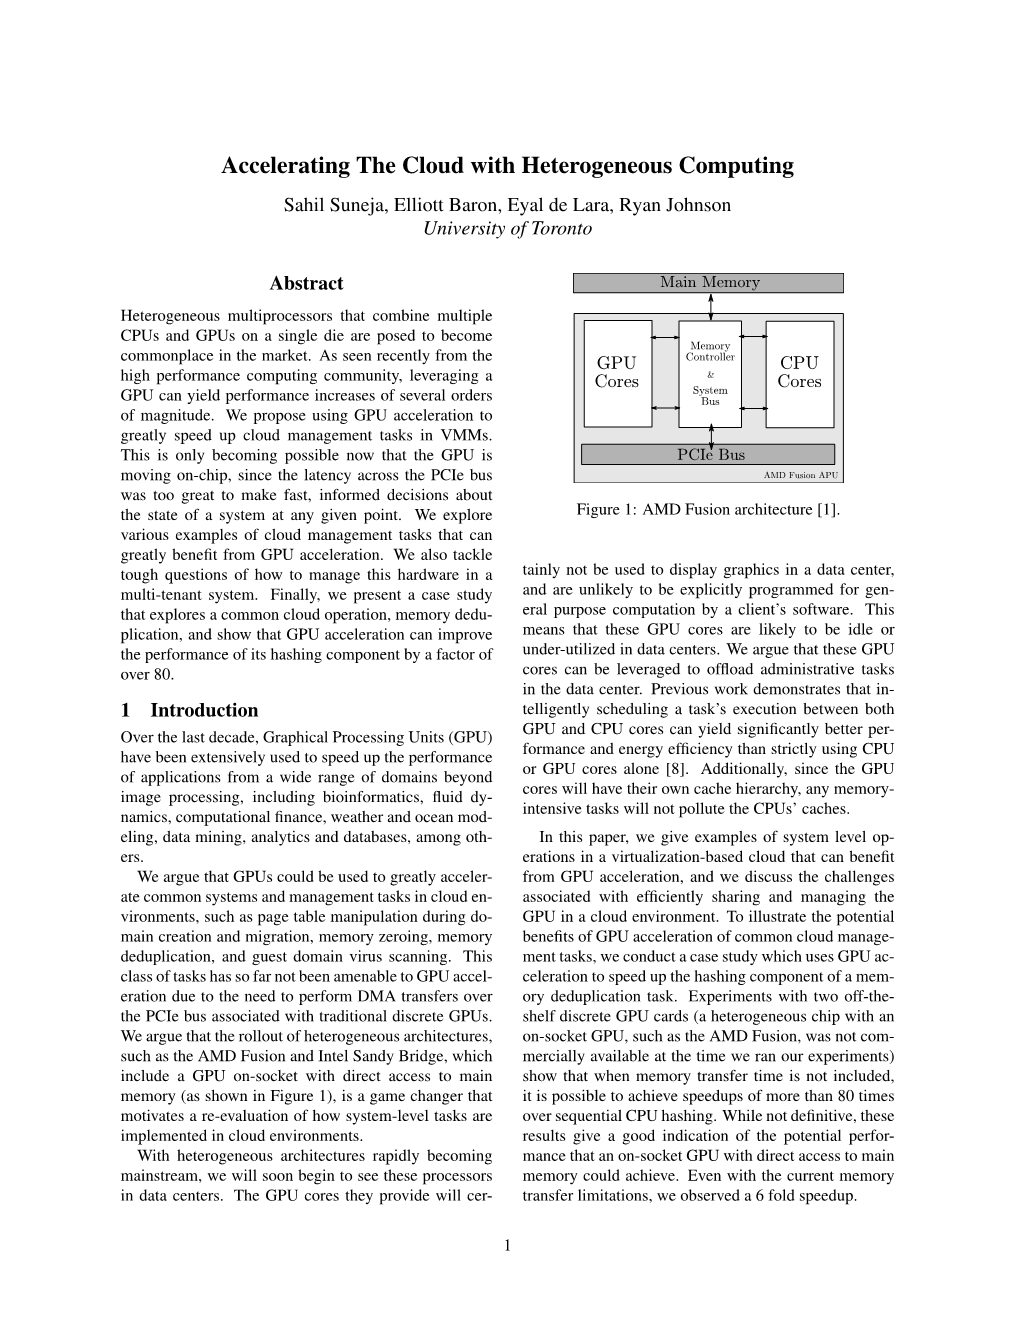 Accelerating the Cloud with Heterogeneous Computing Sahil Suneja, Elliott Baron, Eyal De Lara, Ryan Johnson University of Toronto